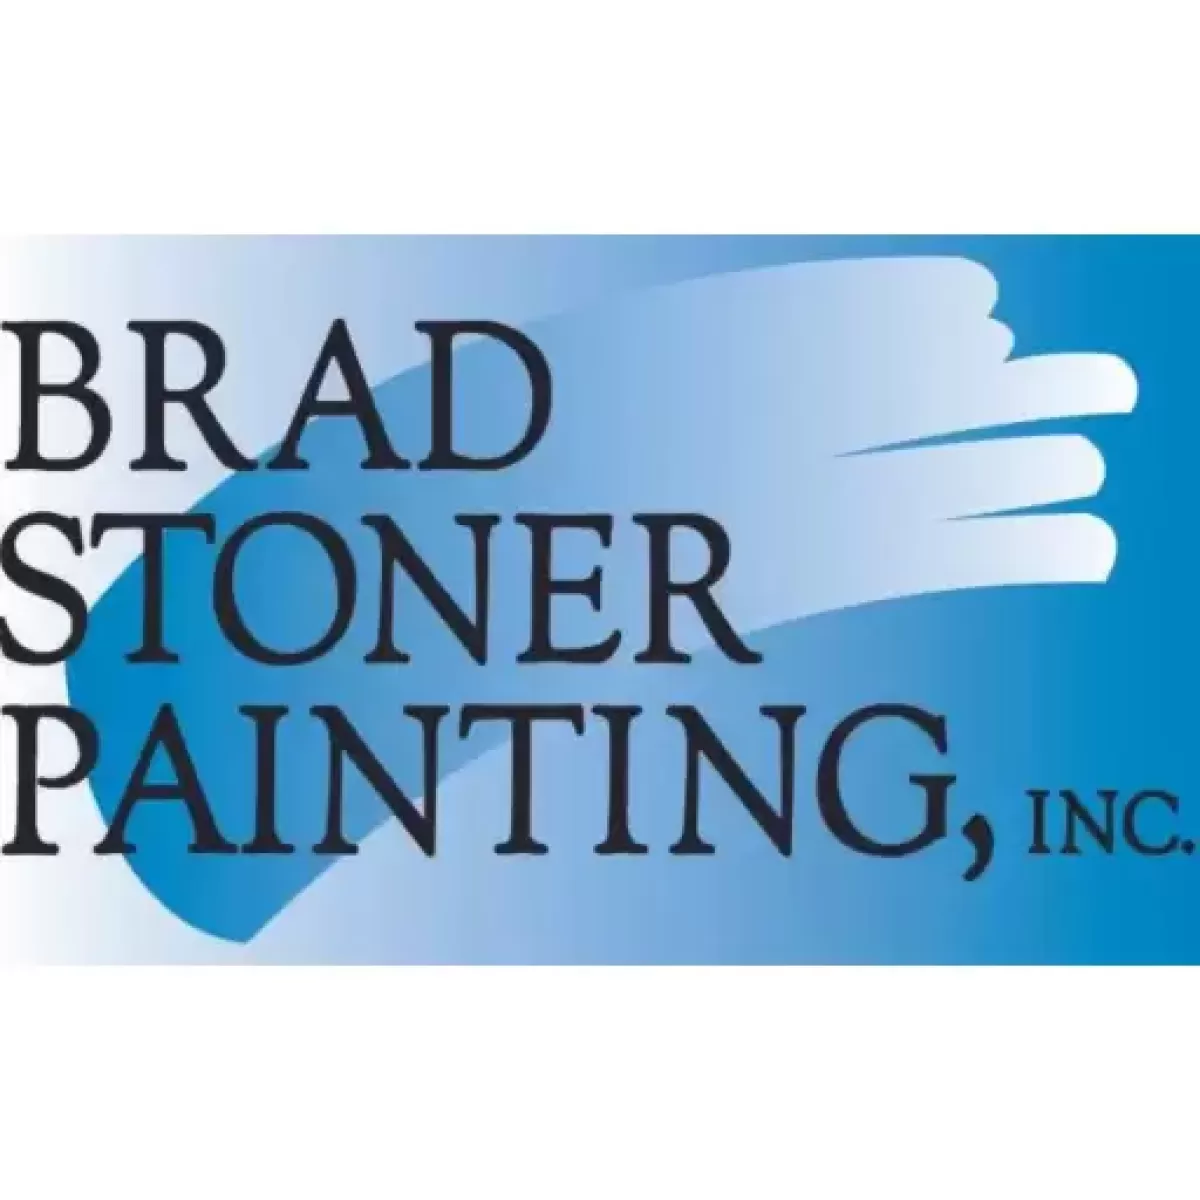 Brad Stoner Painting, Inc.